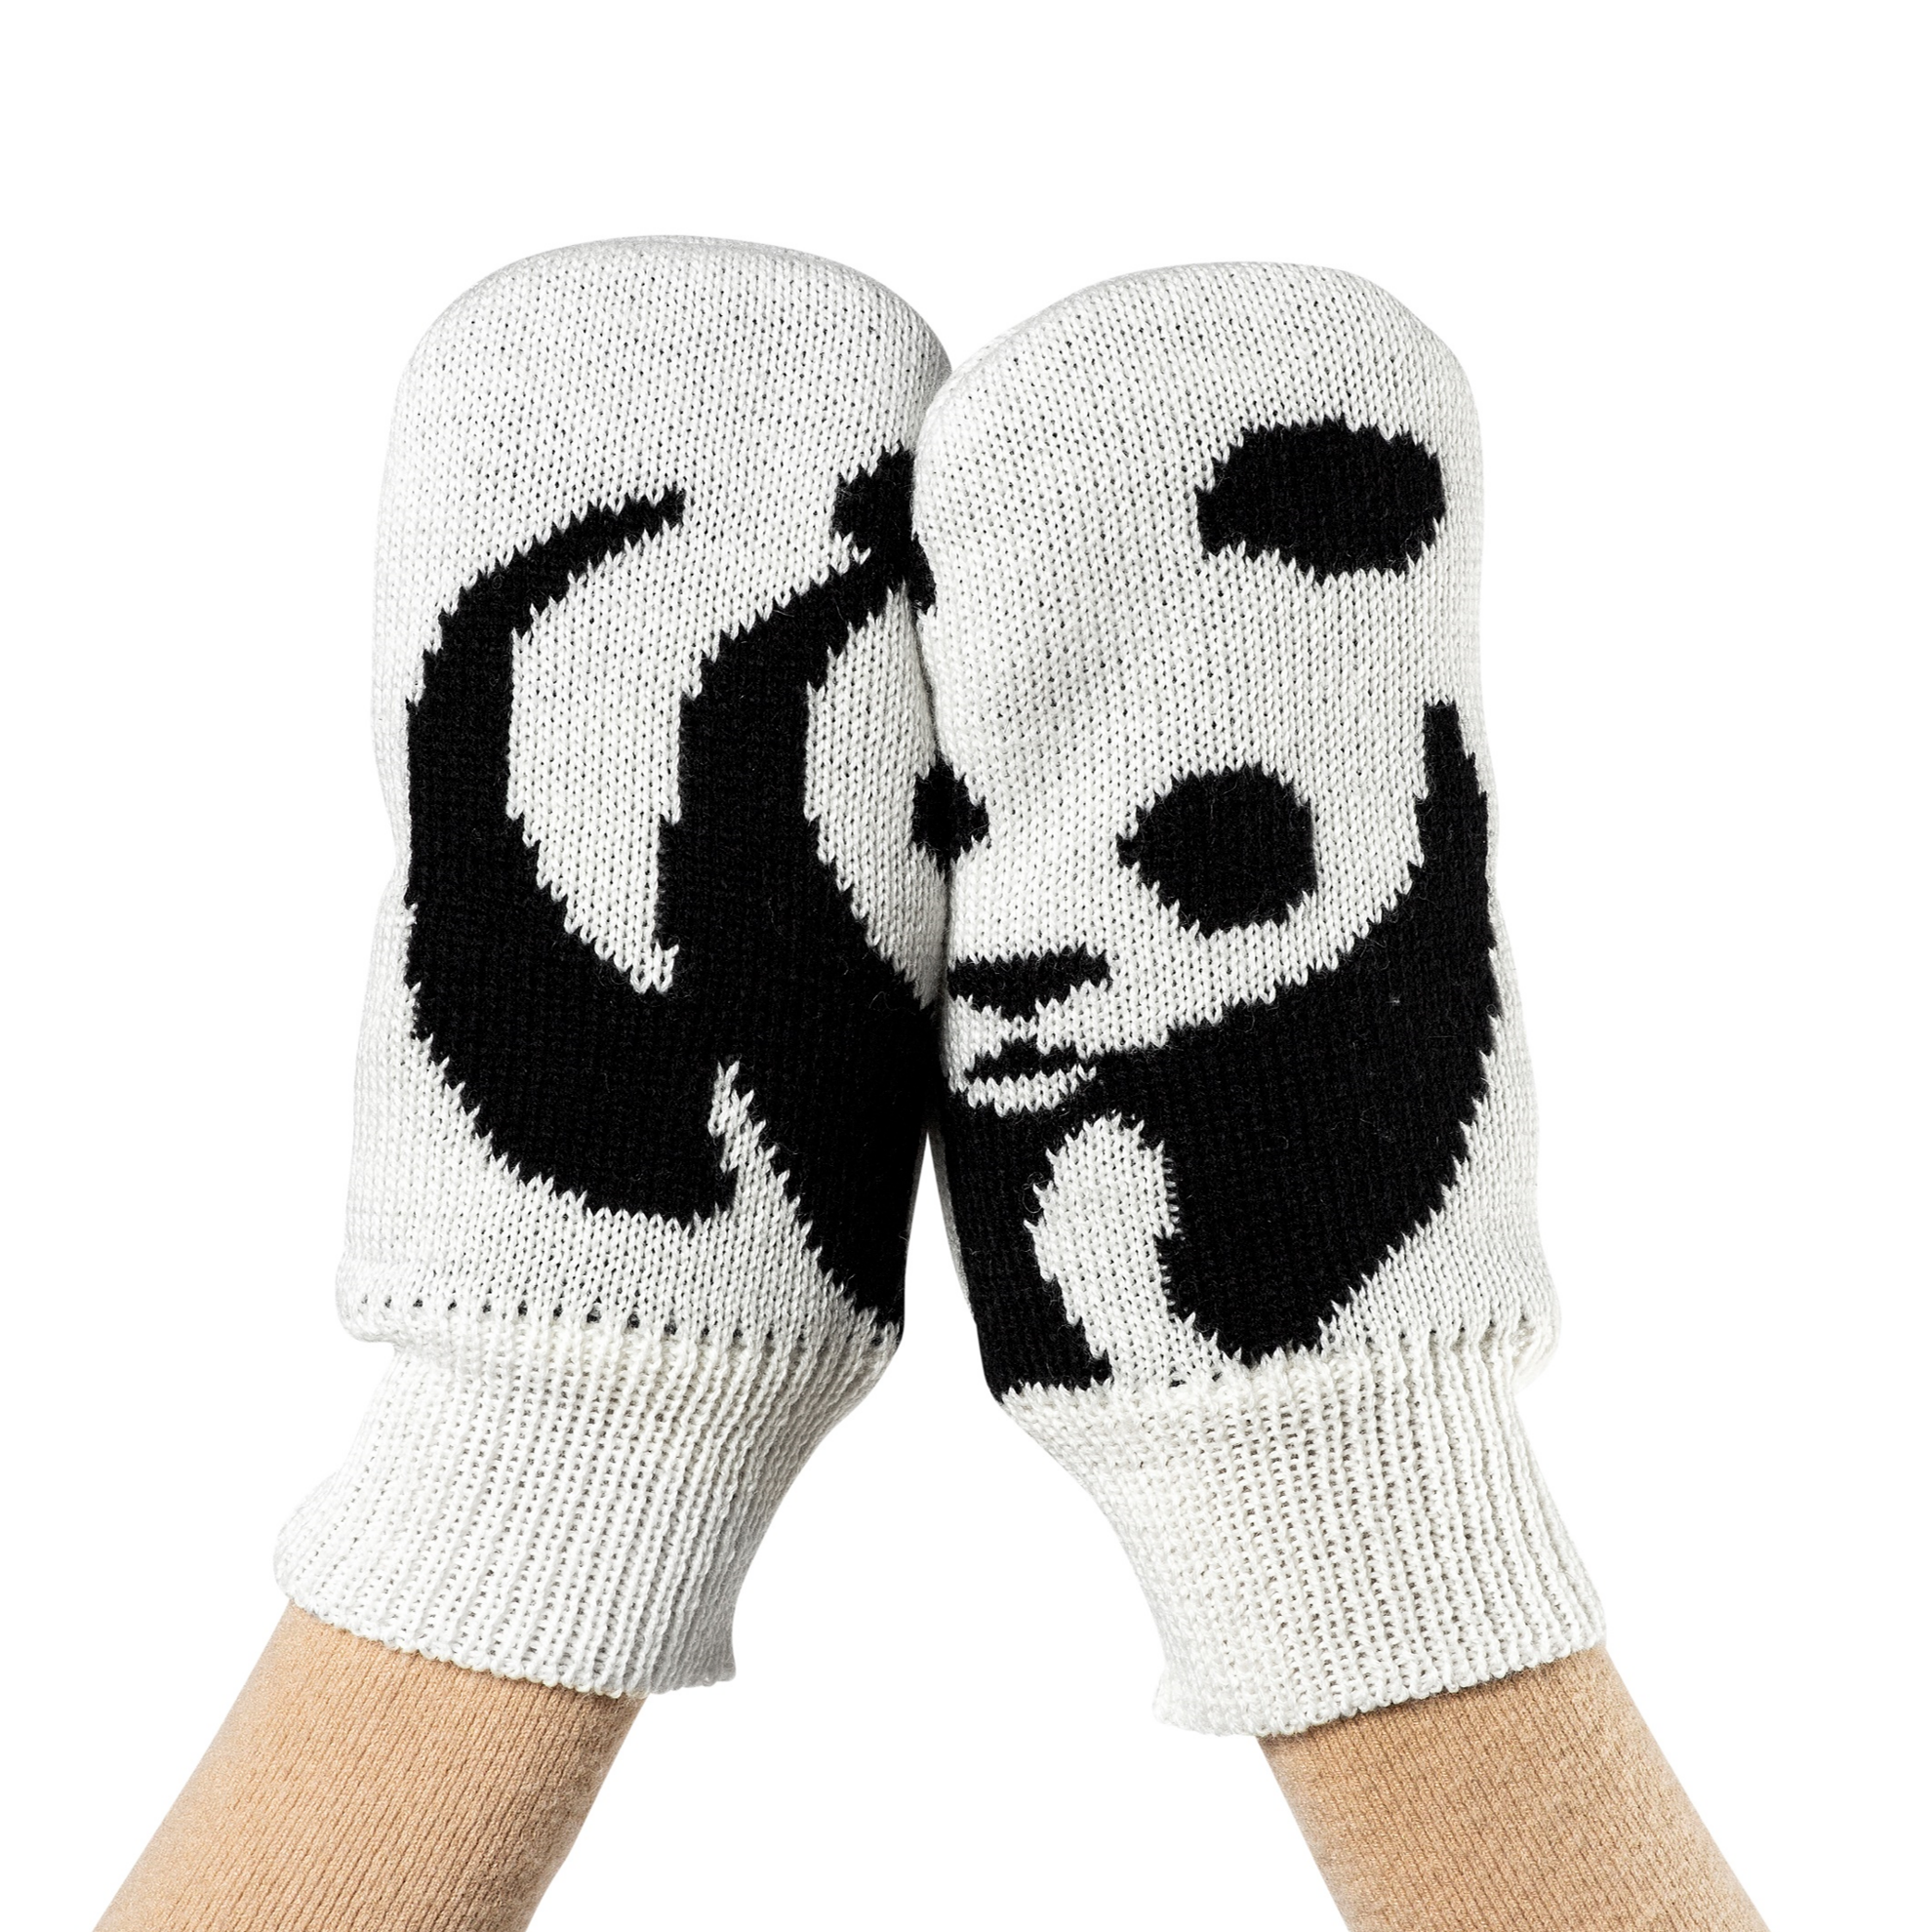 Model wearing the adult panda mittens